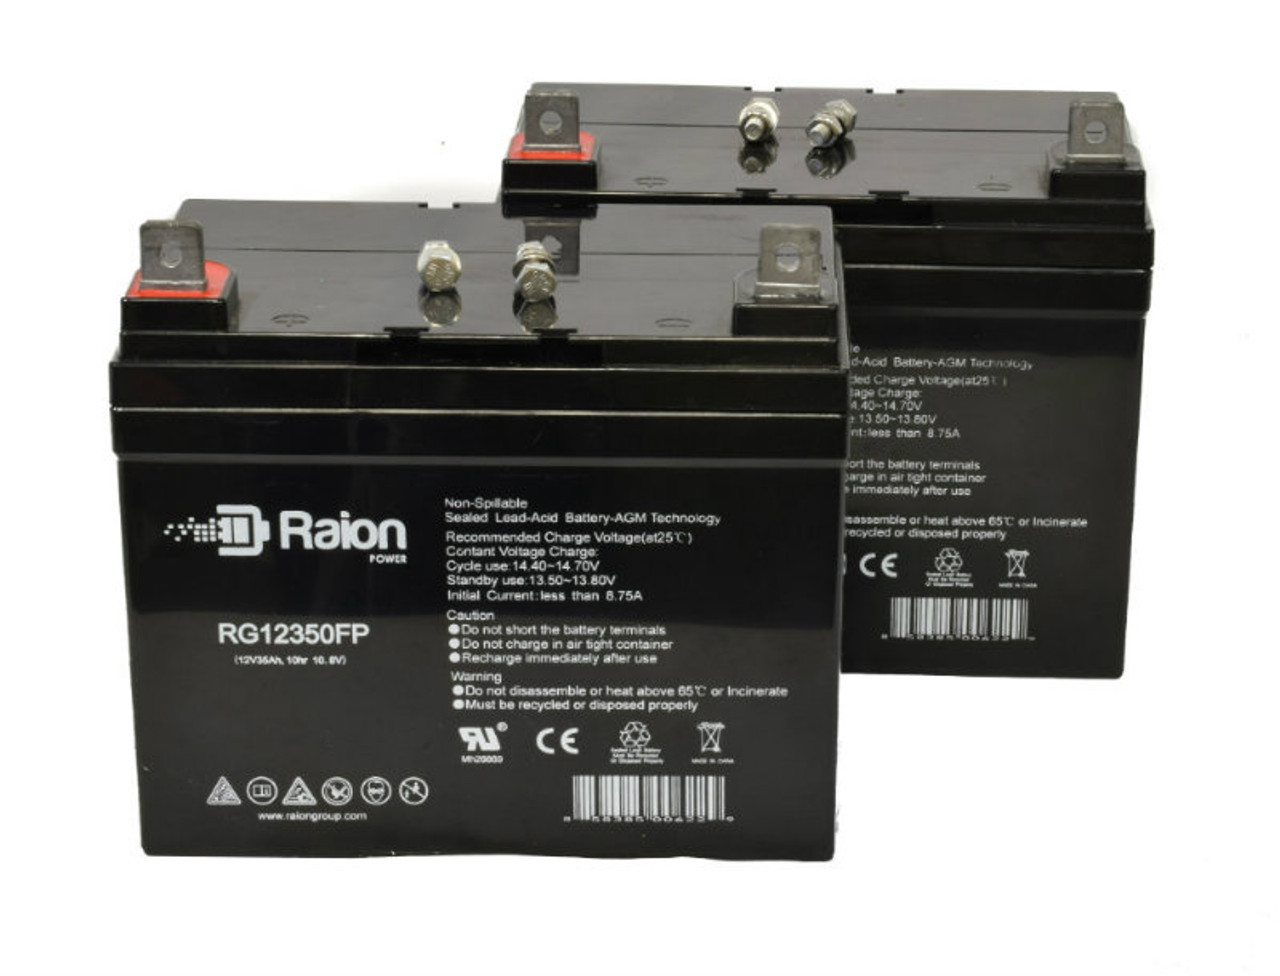 Raion Power Replacement 12V 35Ah Lawn Mower Battery for John Deere 5205 - 2 Pack